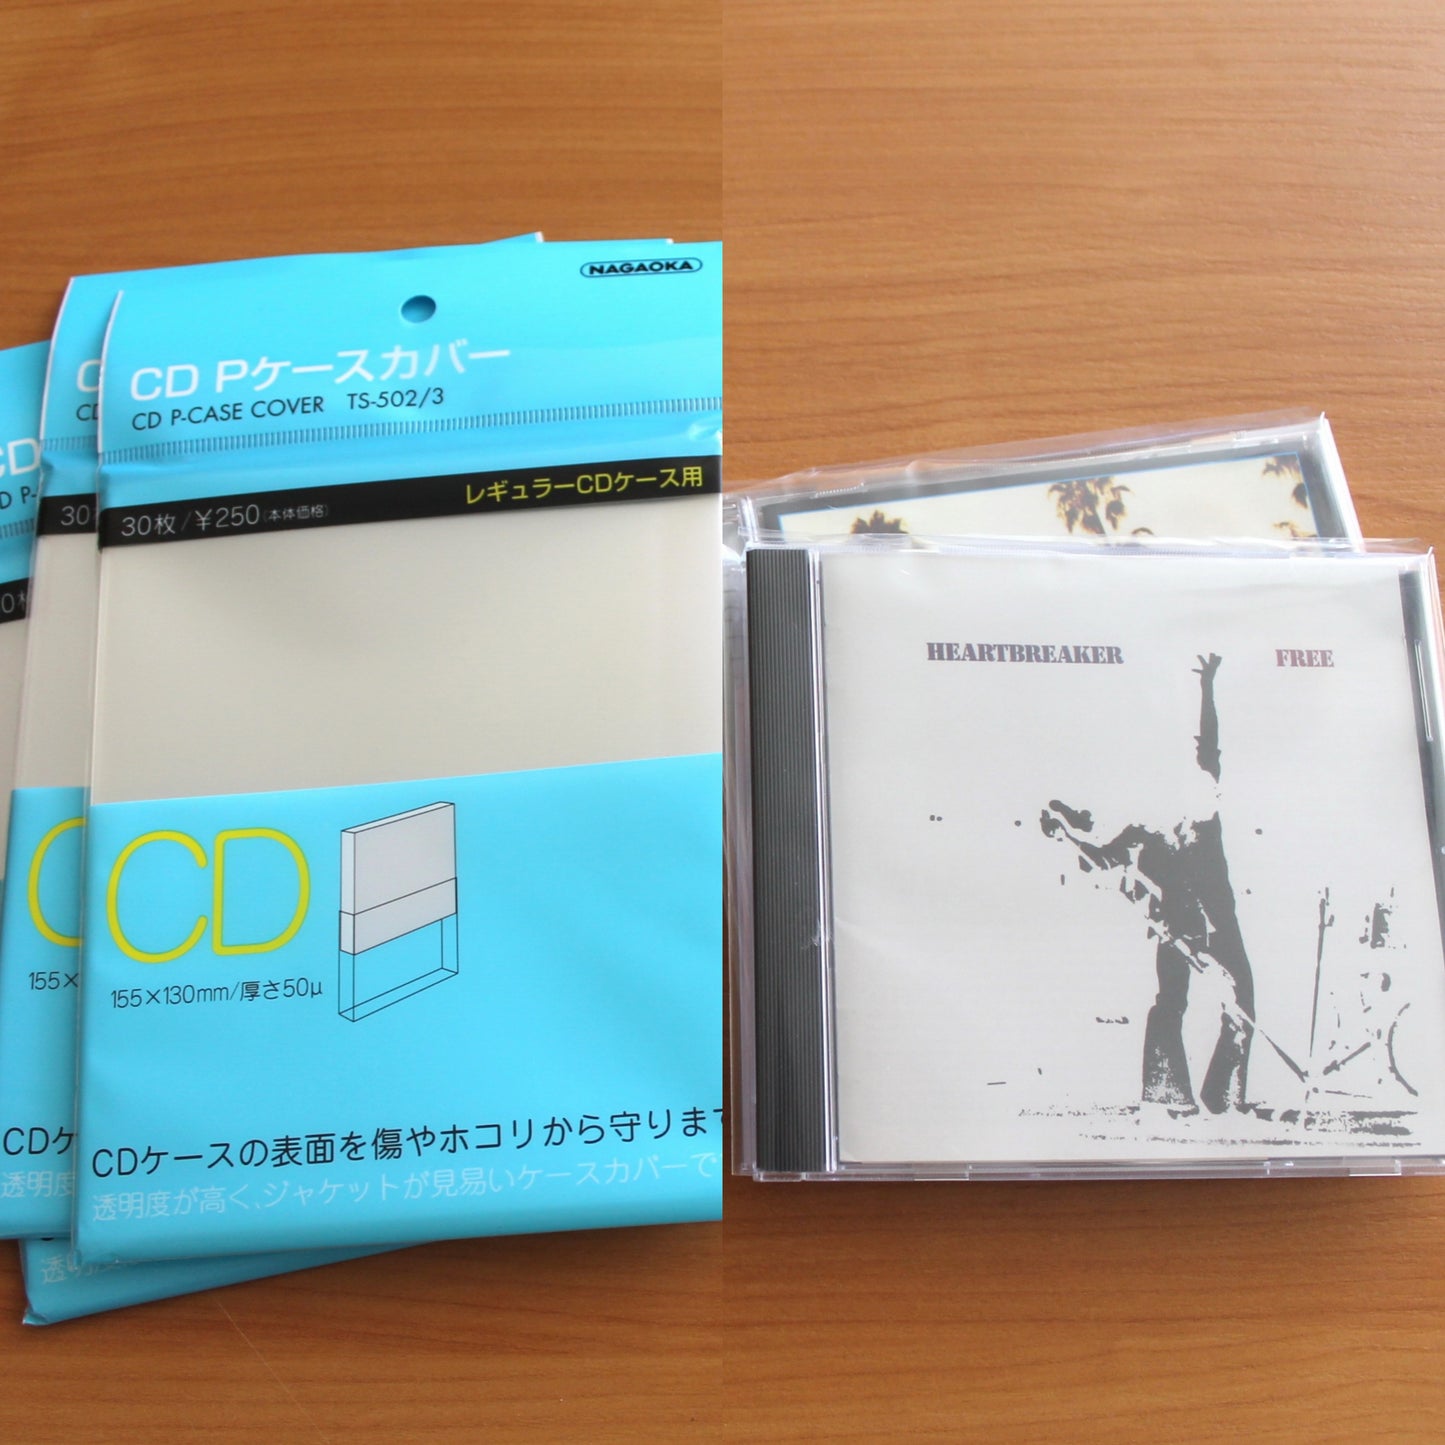 30 Nagaoka TS-502/3 Jewel CD-Hüllen mit offener Oberseite